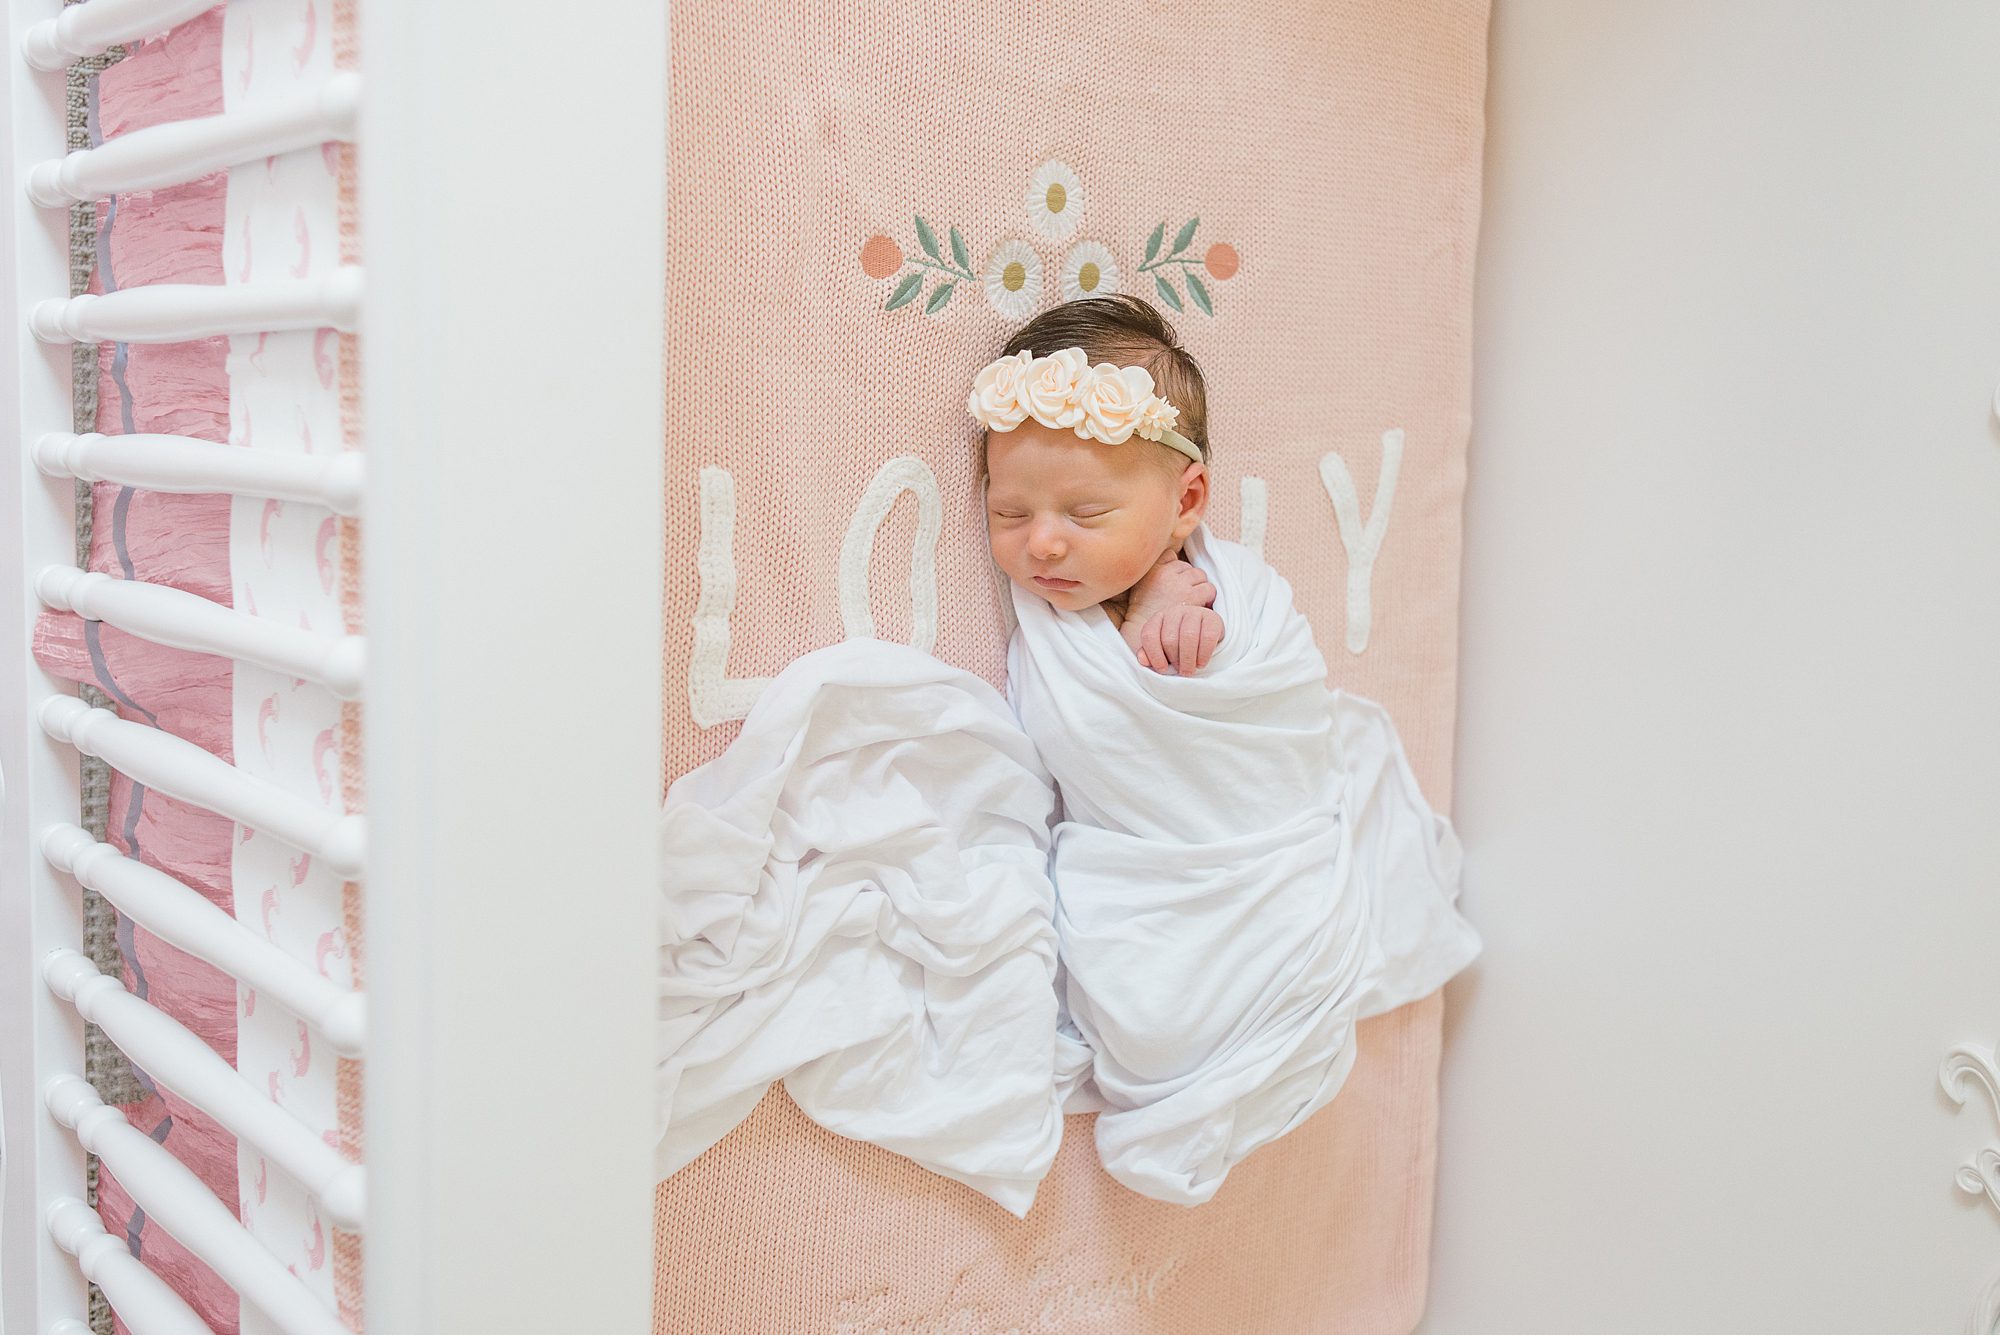 Timeless Newborn Portraits of baby girl in dainty nursery